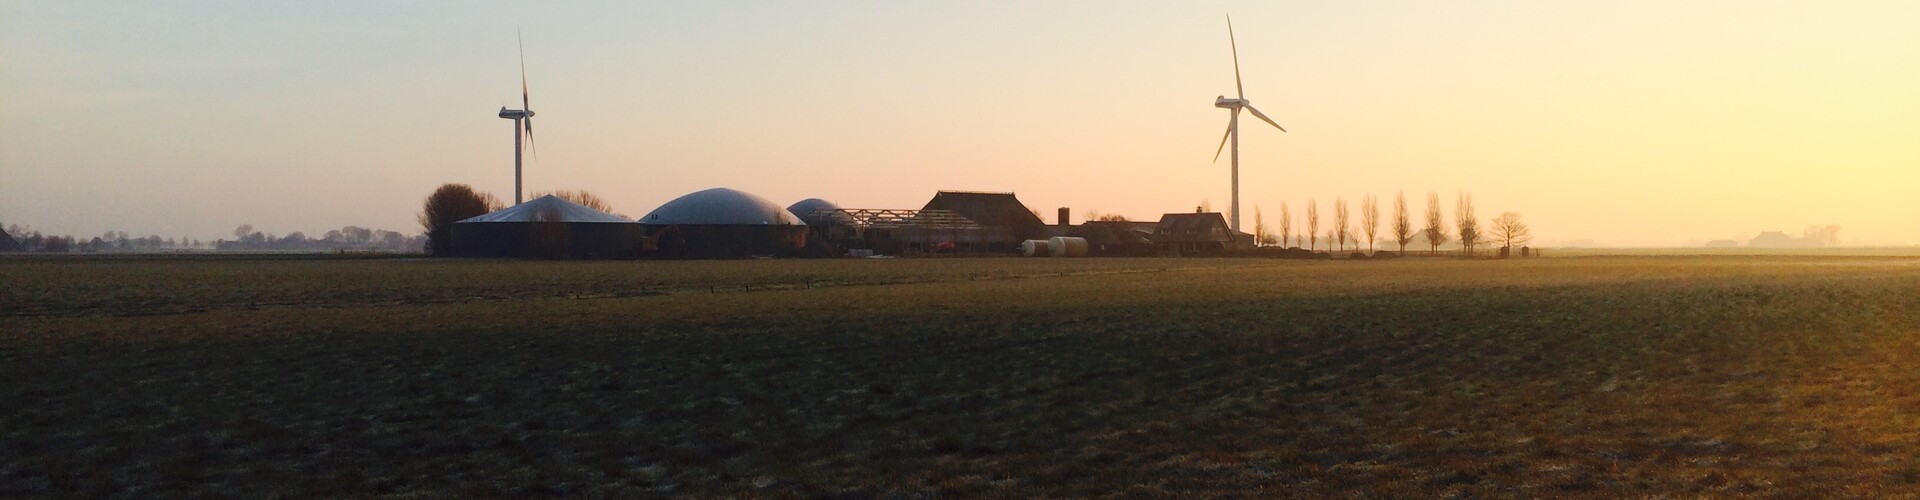 Biogas installation Easterein, the Netherlands